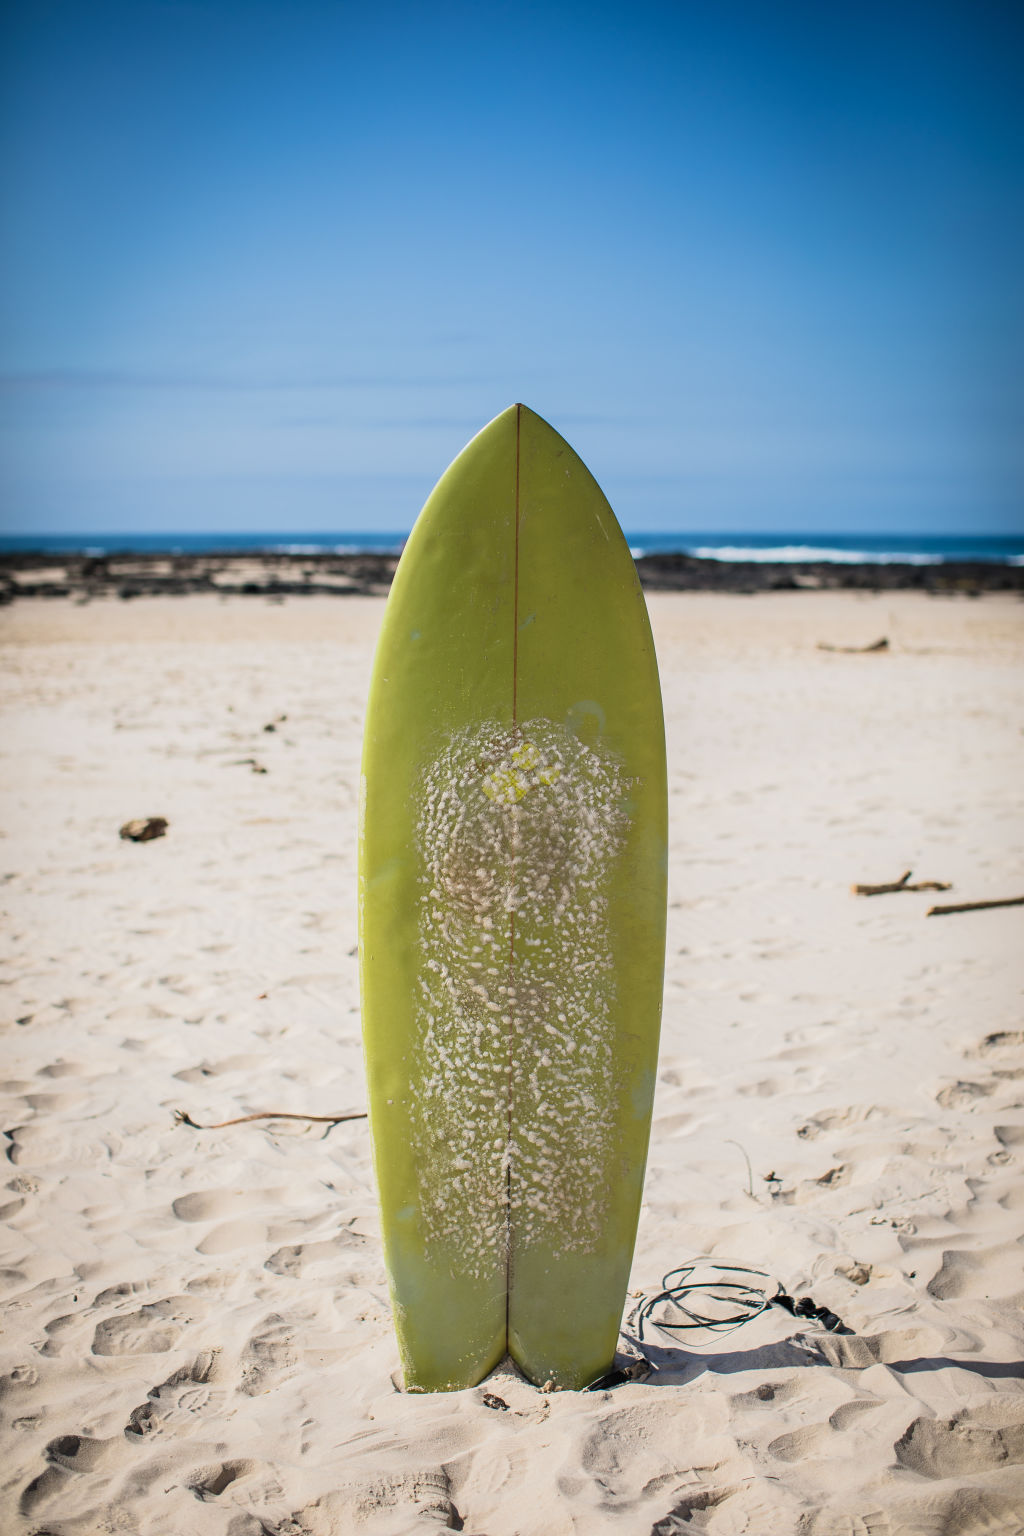 Clare's favourite surfboard. Photo: Marcel Bracks